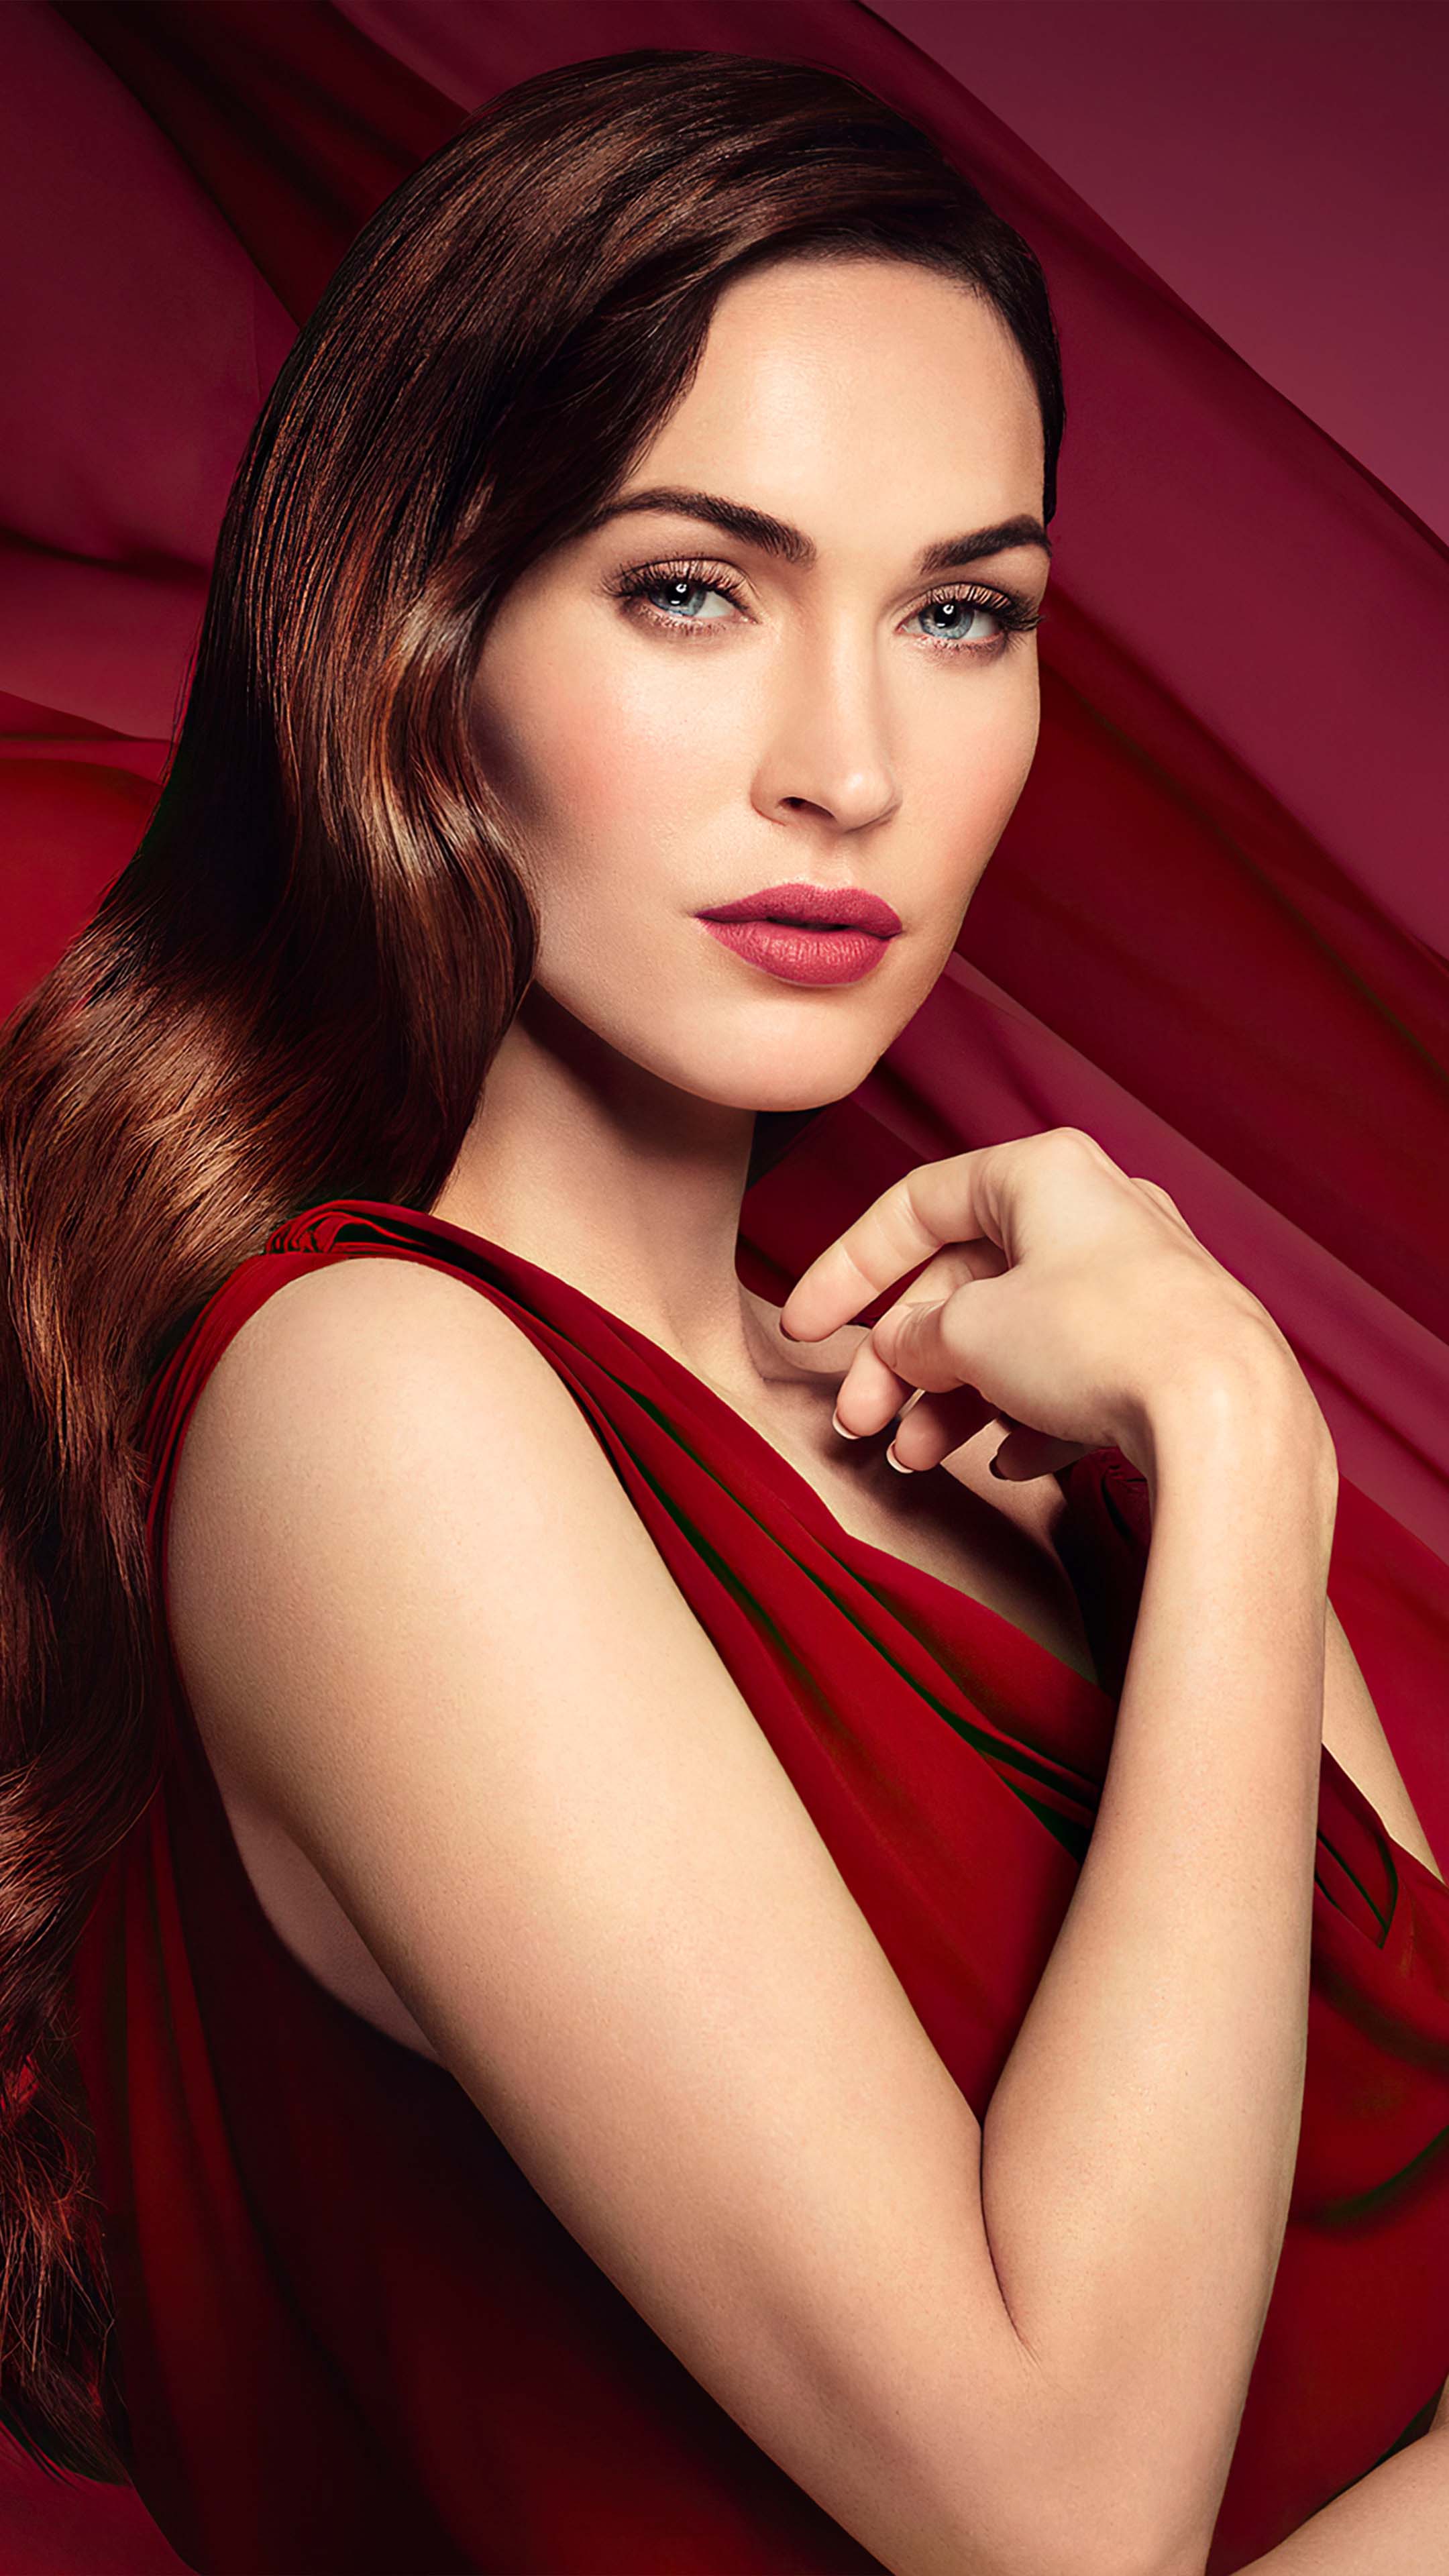 Gorgeous Megan Fox In Red Dress 4K Ultra HD Mobile Wallpaper